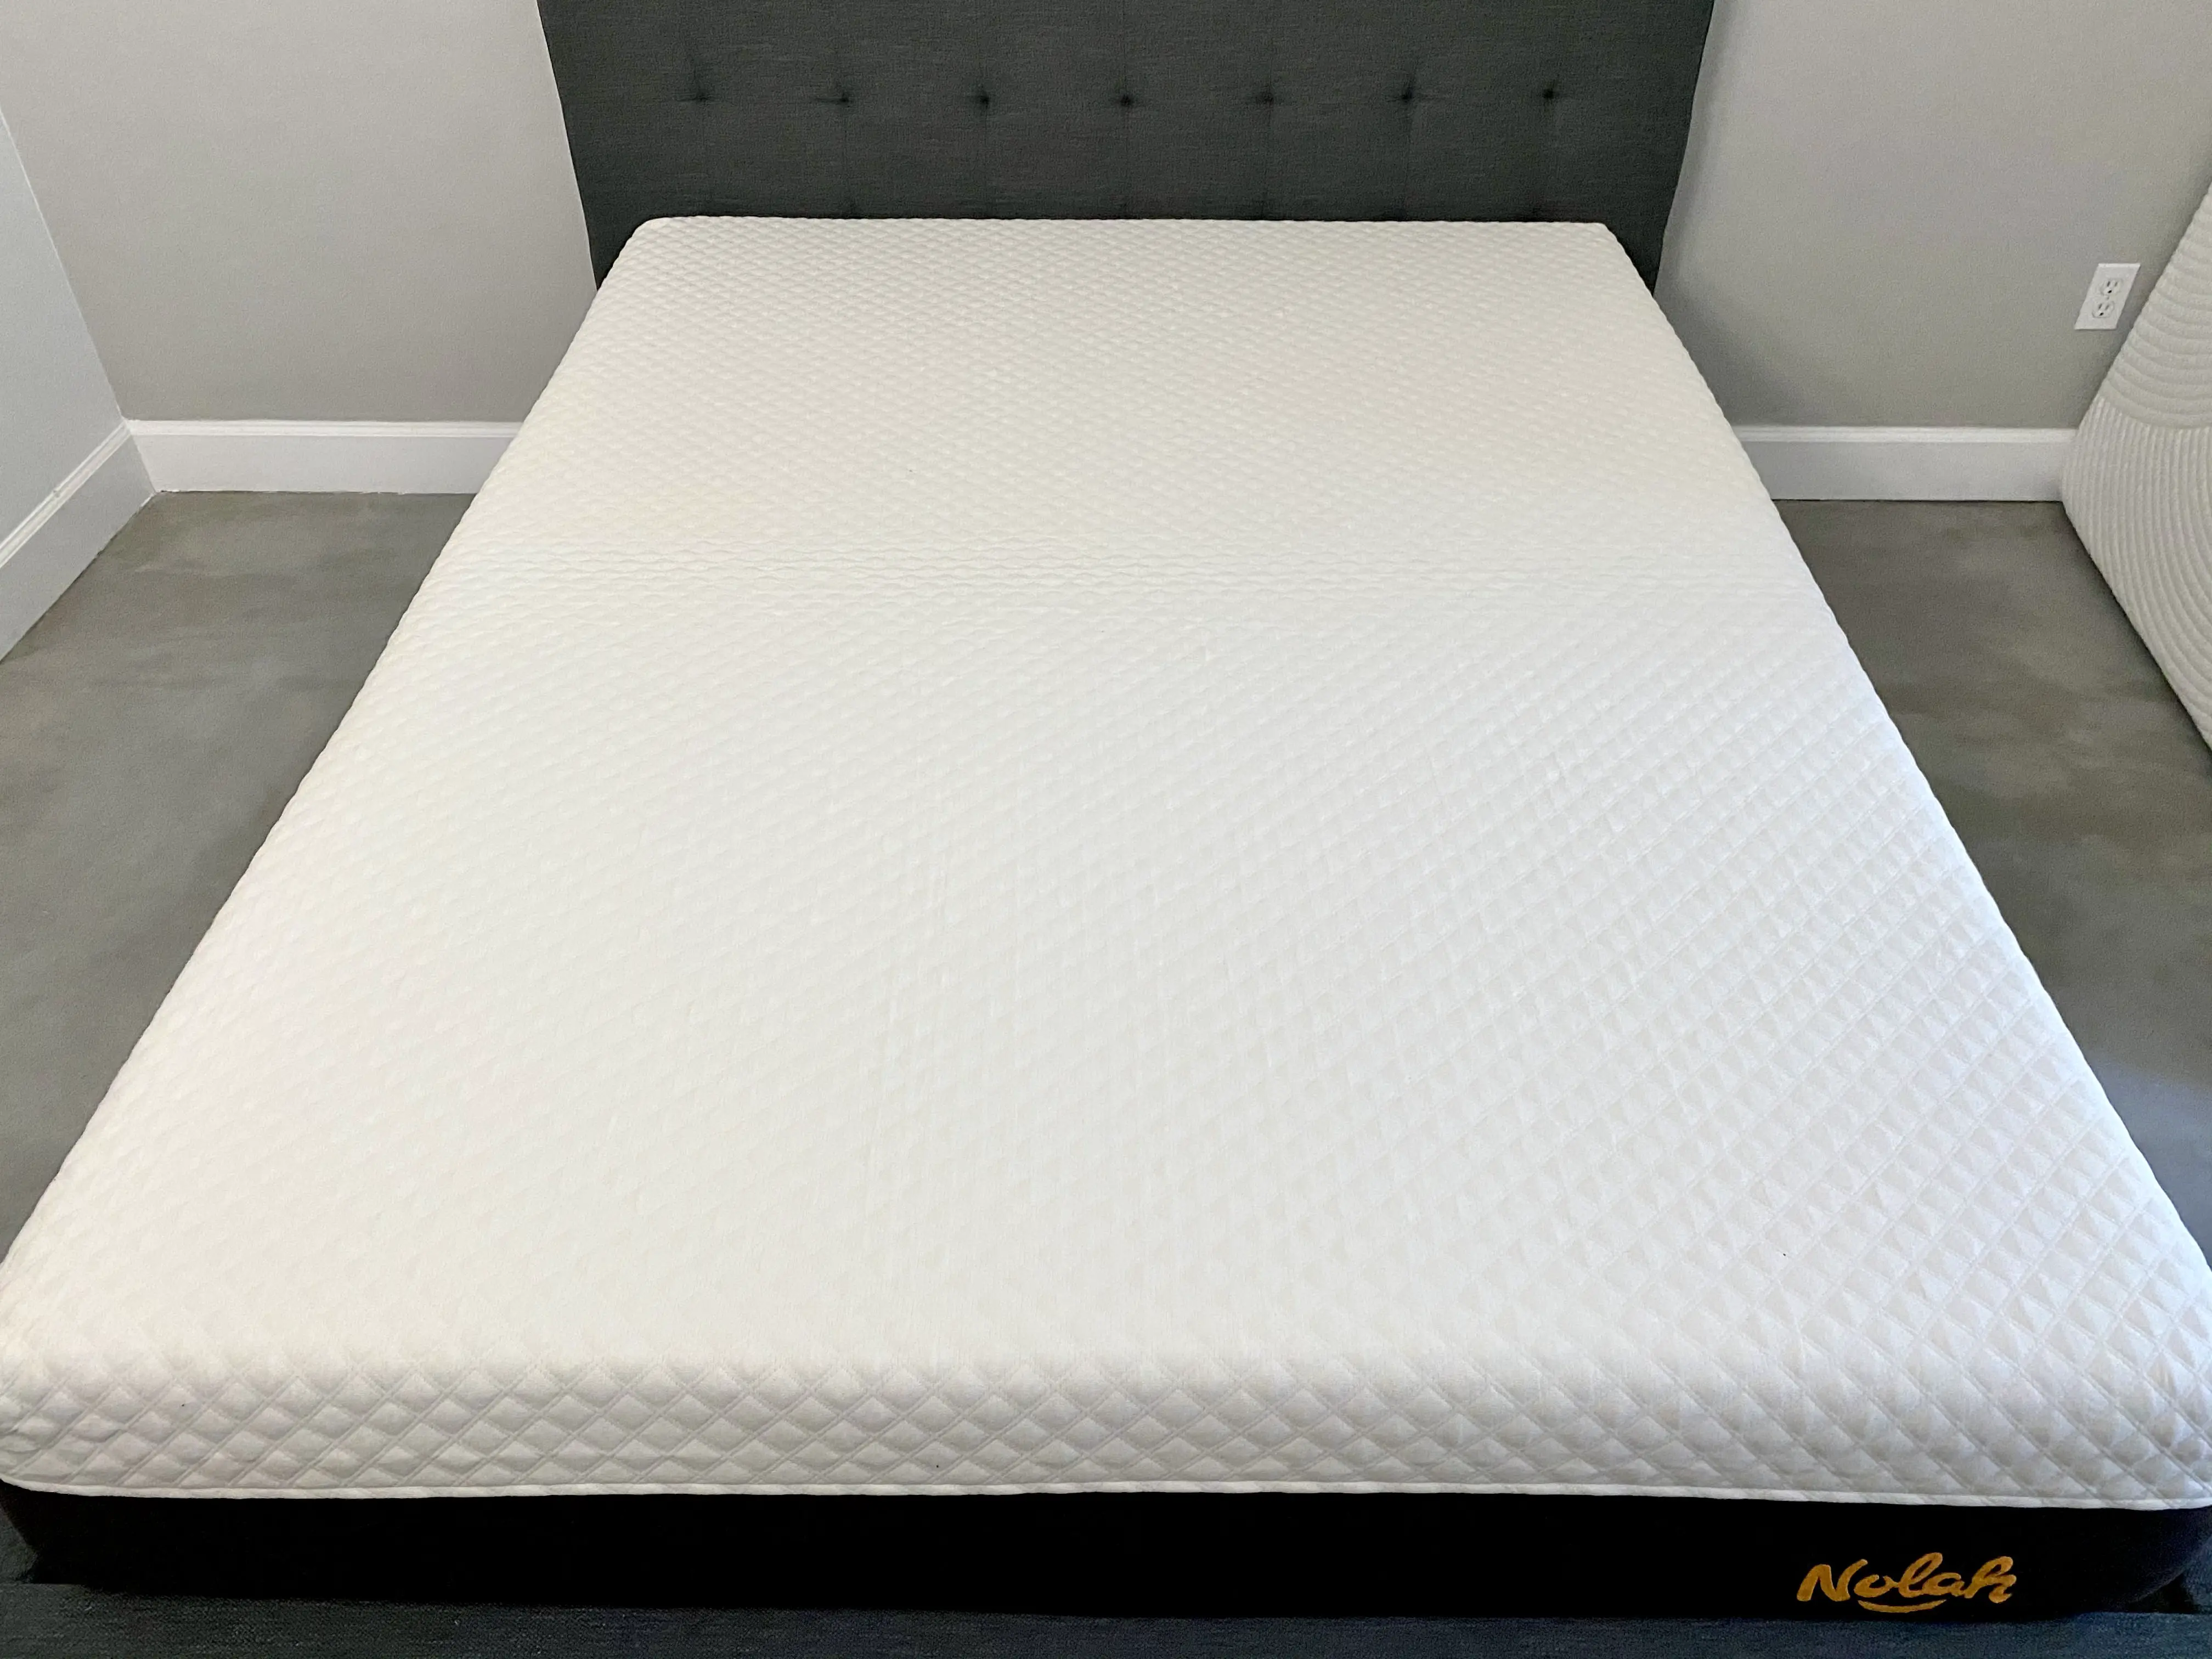 Nolah Signature 12 flippable mattress review